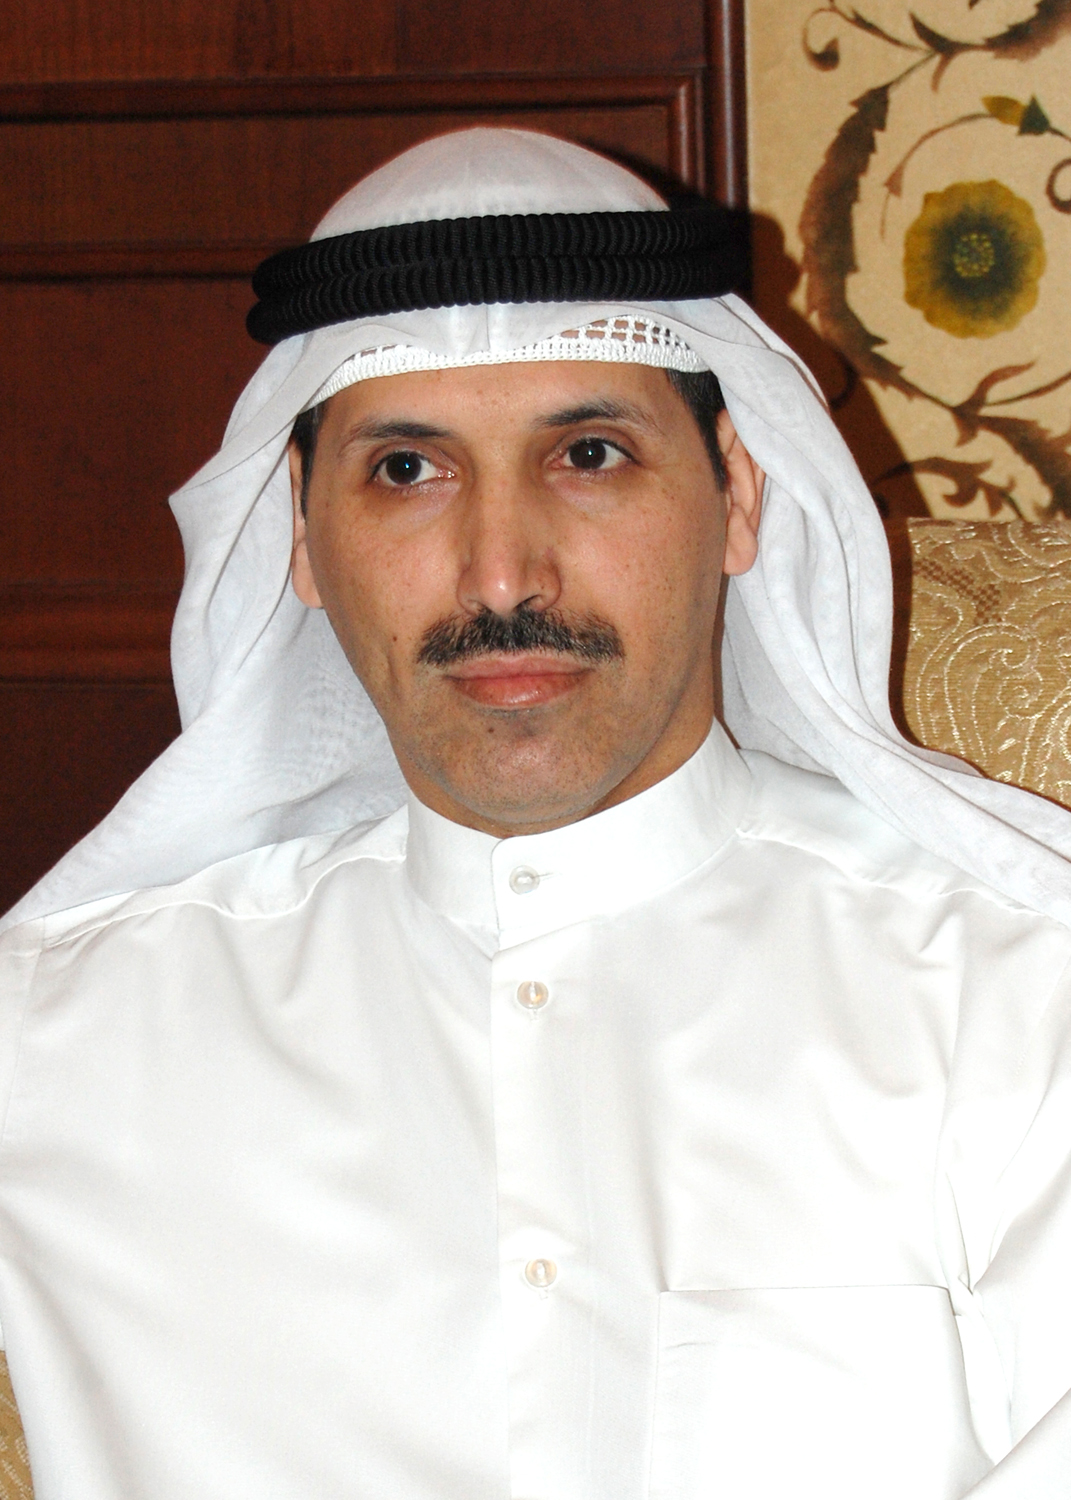 chief of the Kuwaiti shooters team Obeid Al-Osaimi